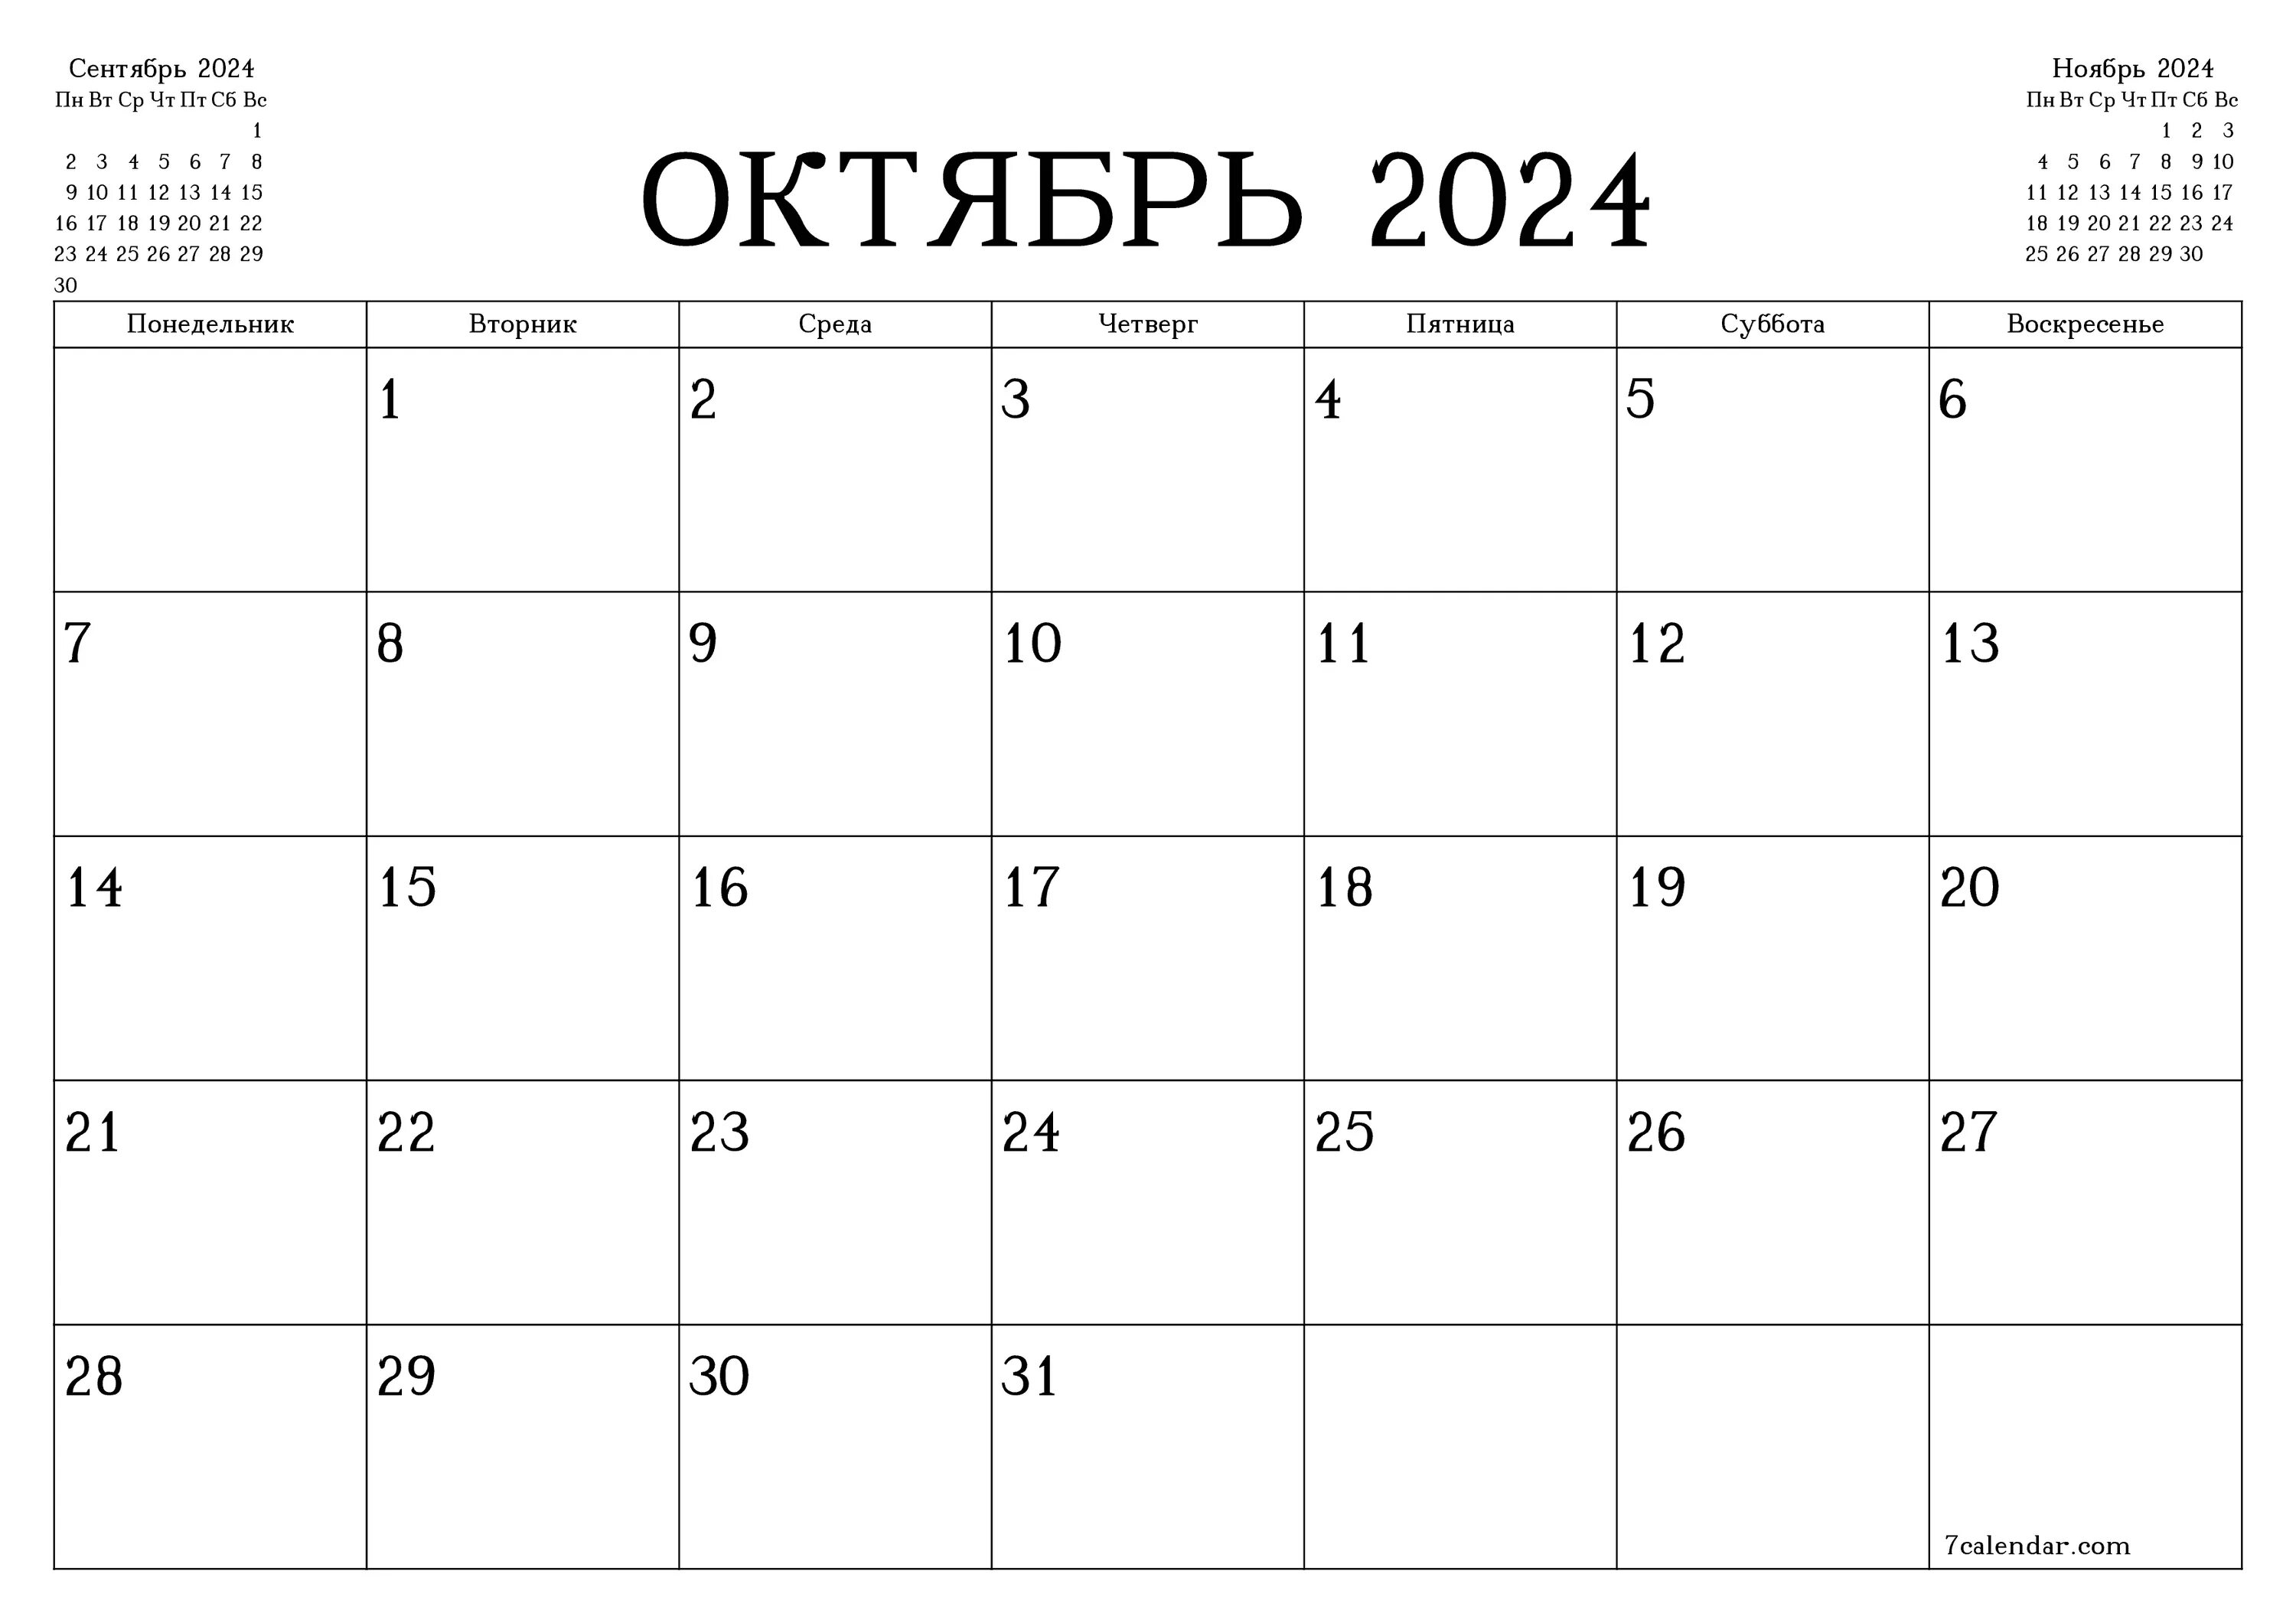 Календарь на октябрь 2020г. Октябрь 2020 года. Календарь октябрь 2020 для печати. Календарь август сентябрь октябрь 2020.